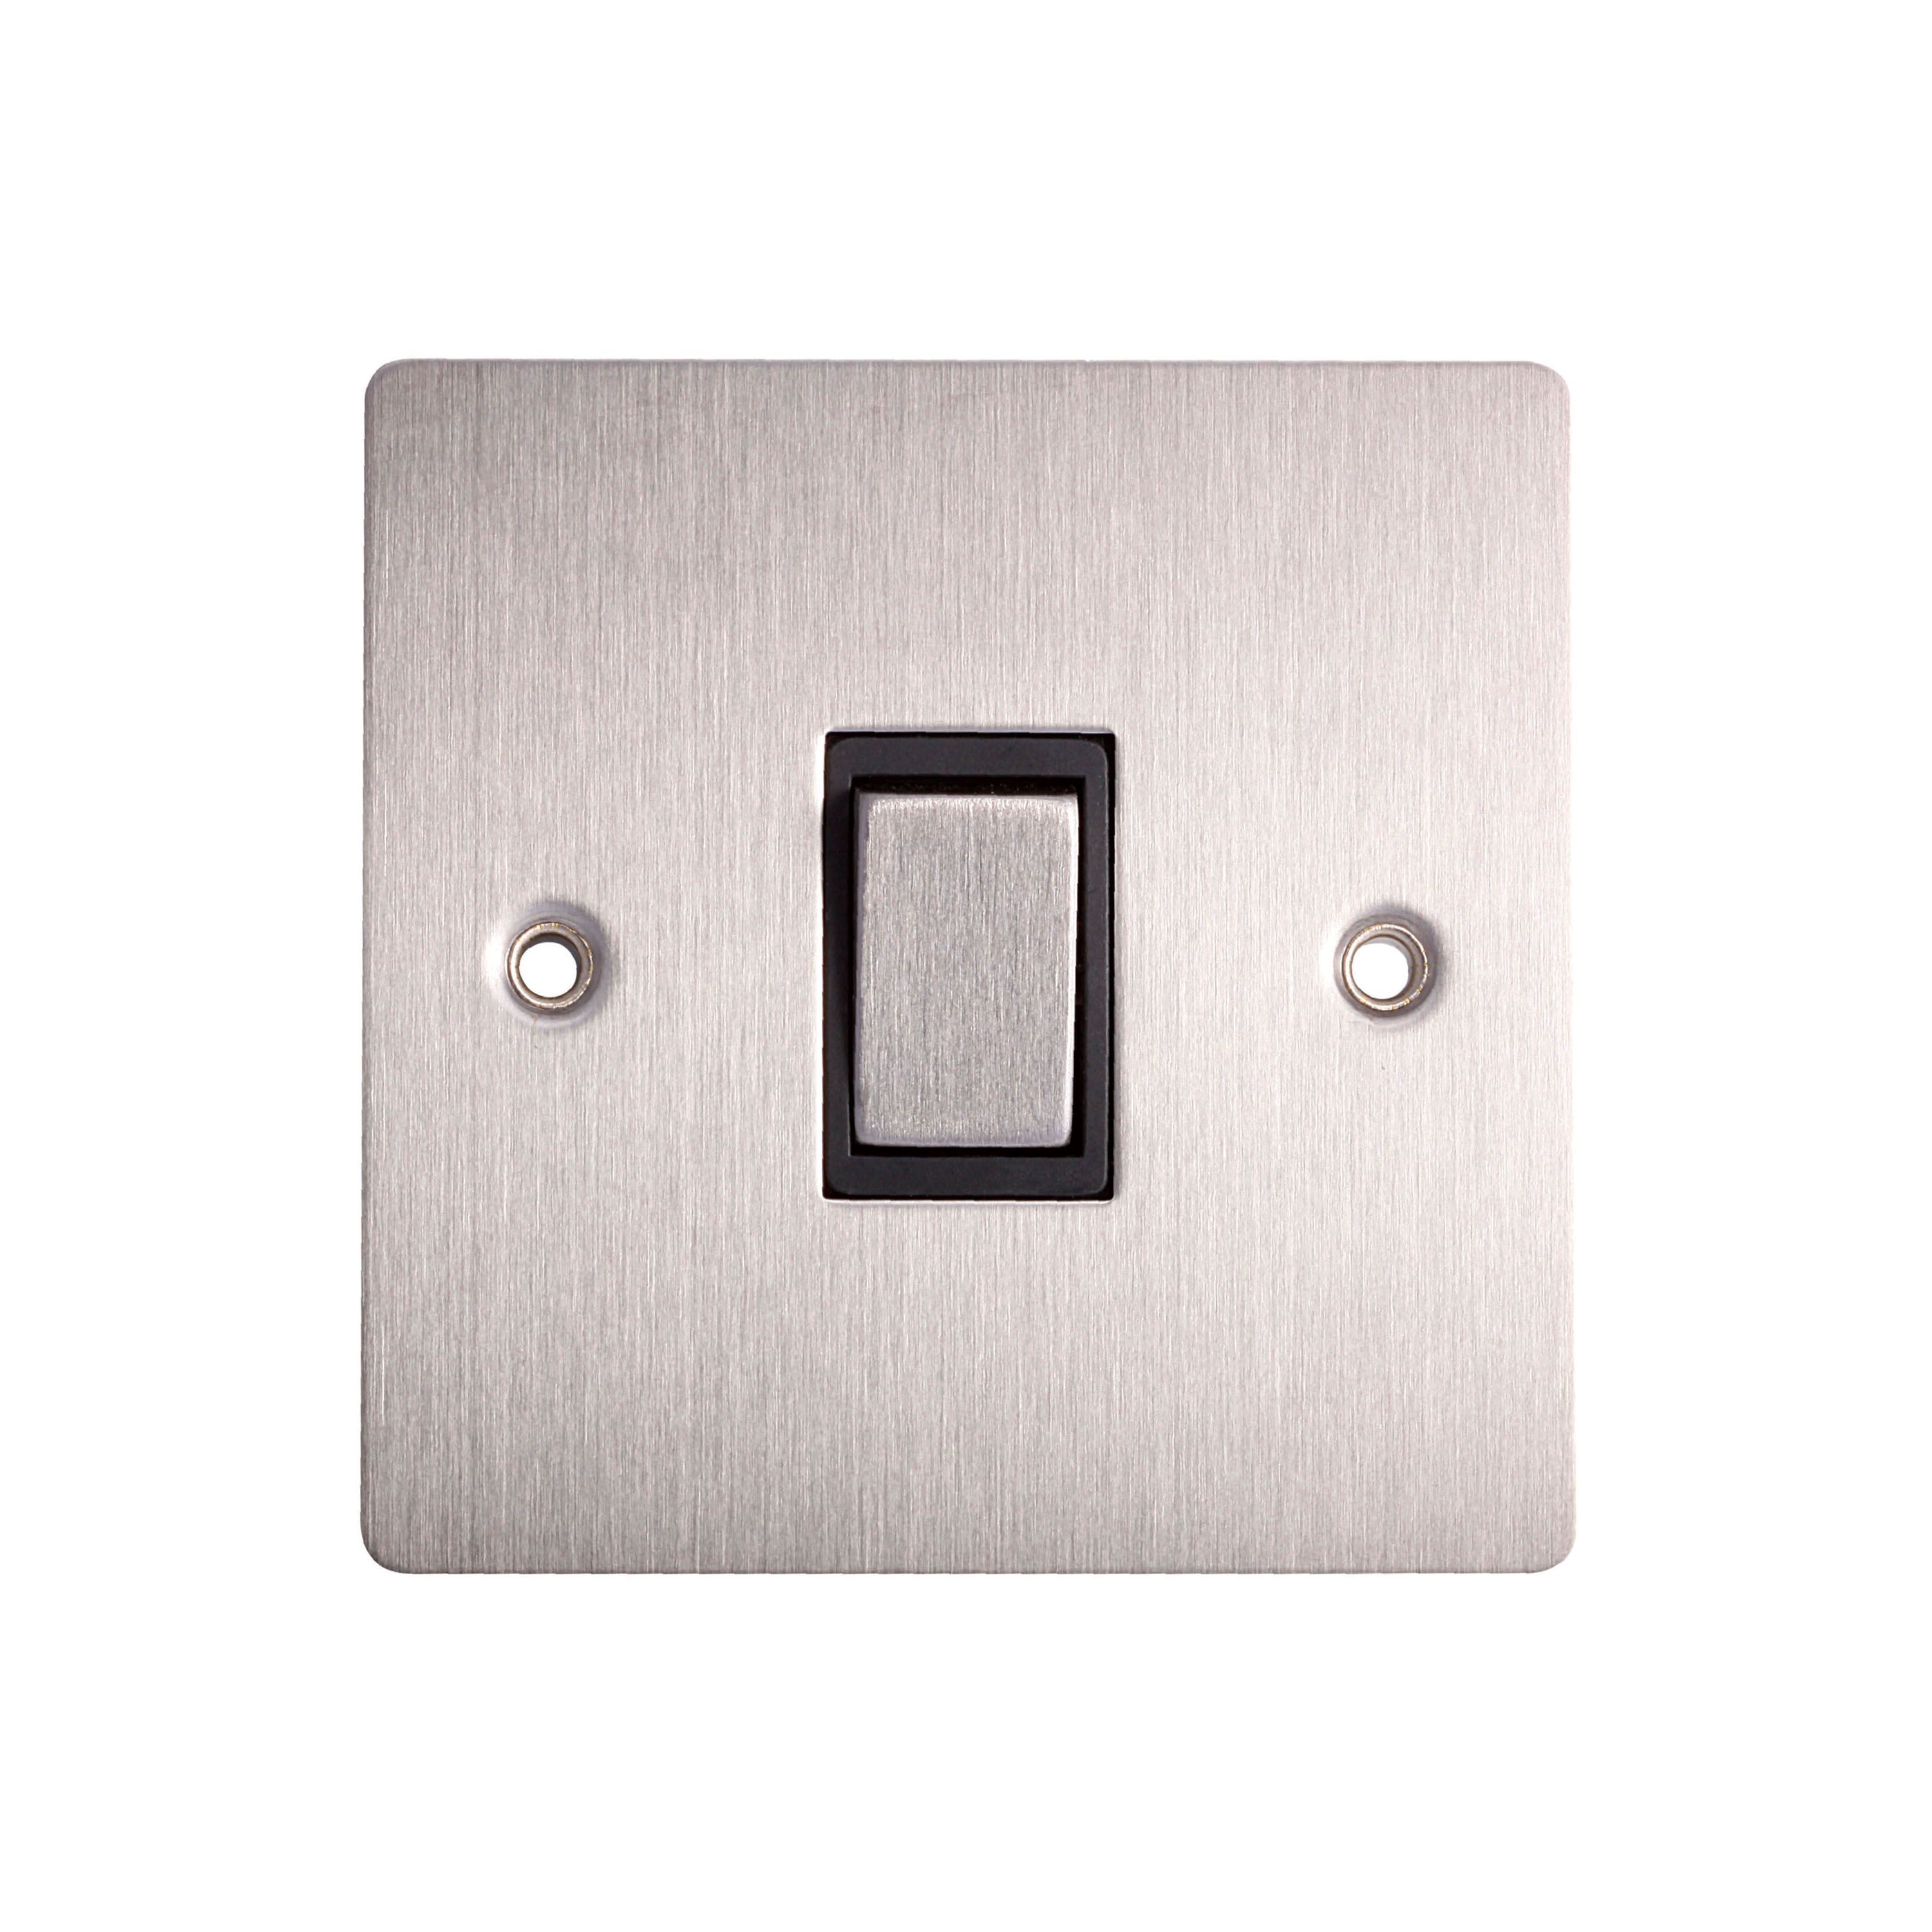 Holder 10A Stainless steel effect Single Intermediate switch